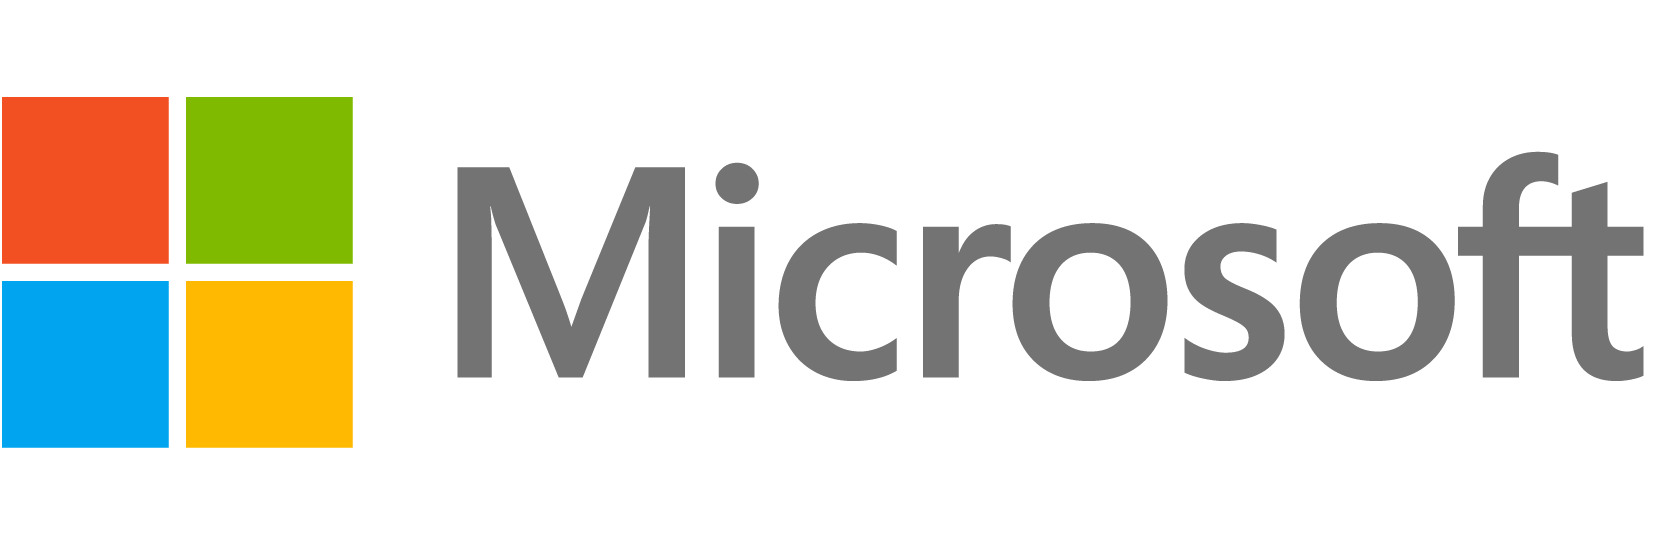 Microsoft-Logo-4204907558.png